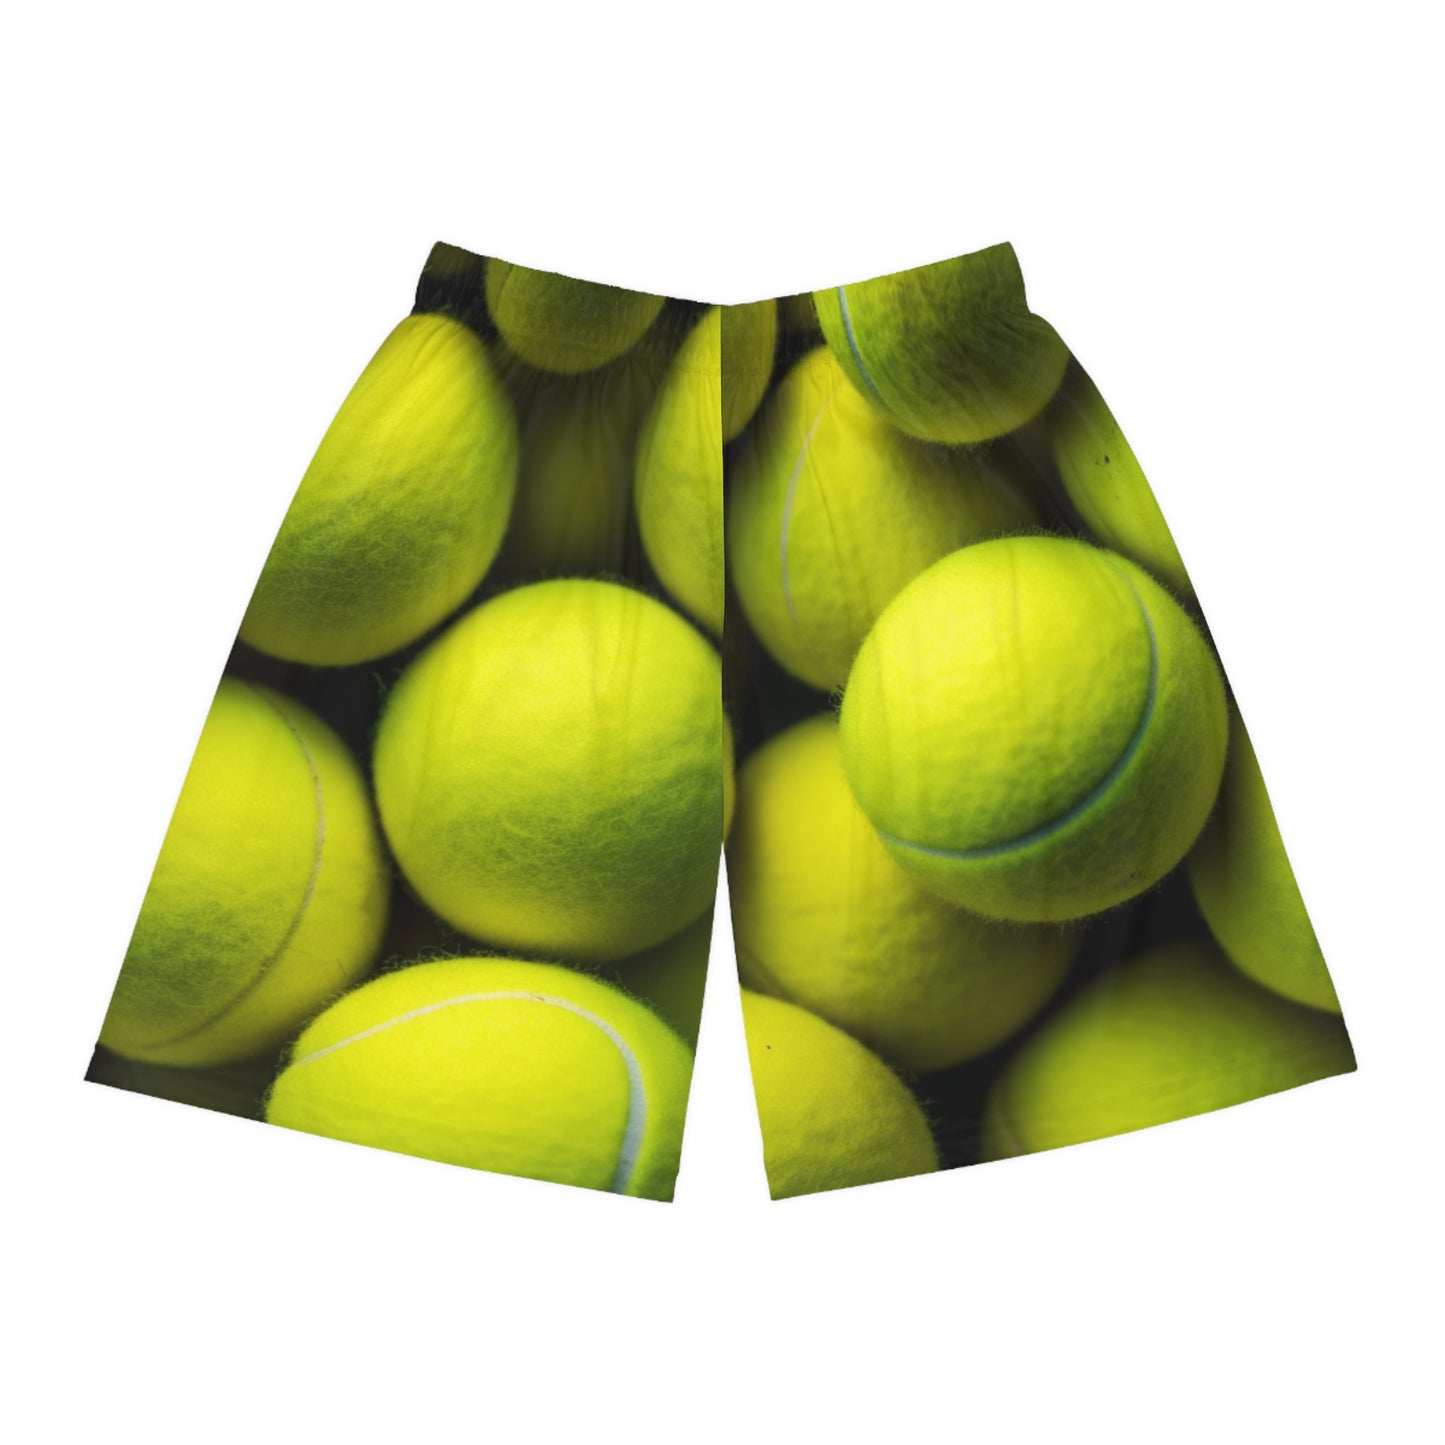 Tennis Ball Sport: Athlete Court Action, Rally & Serve - Basketball Shorts (AOP)